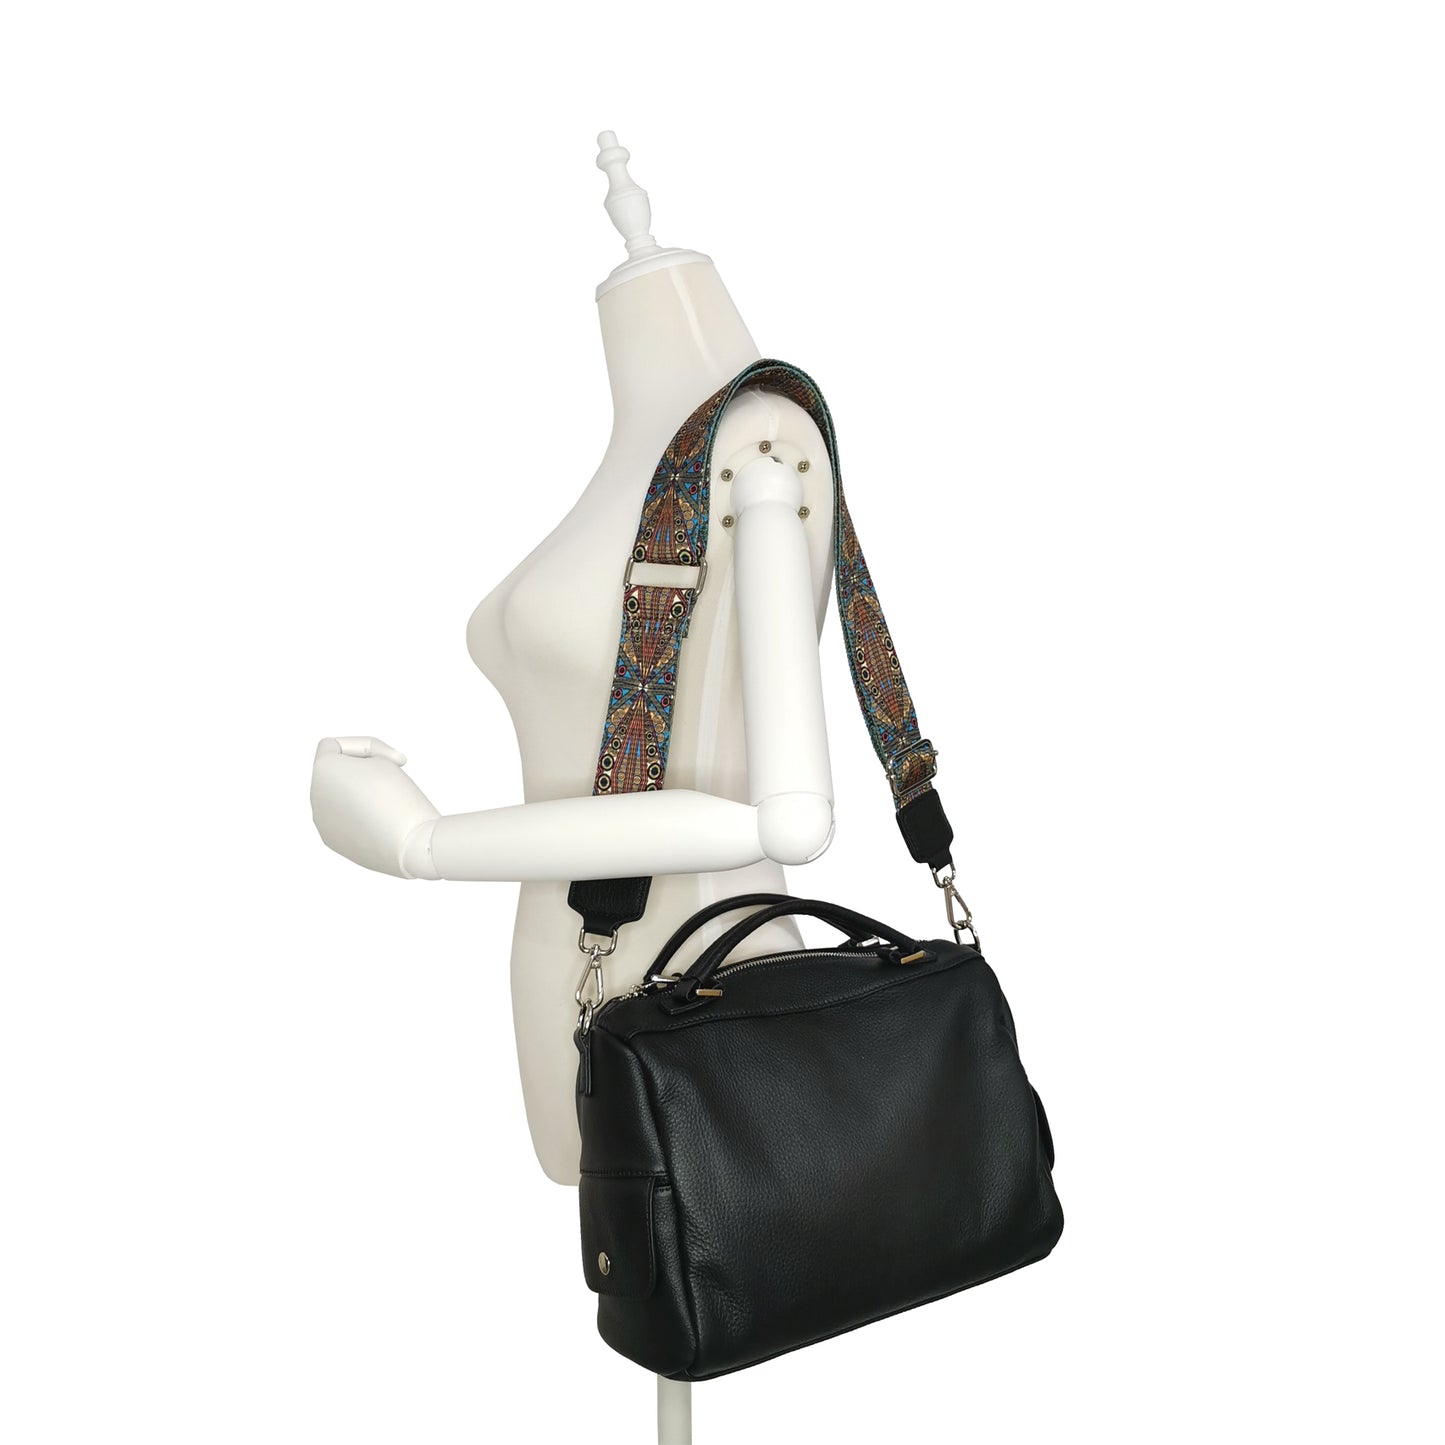 Women's genuine cowhide leather handbag Kabelky v3 design with 2 straps